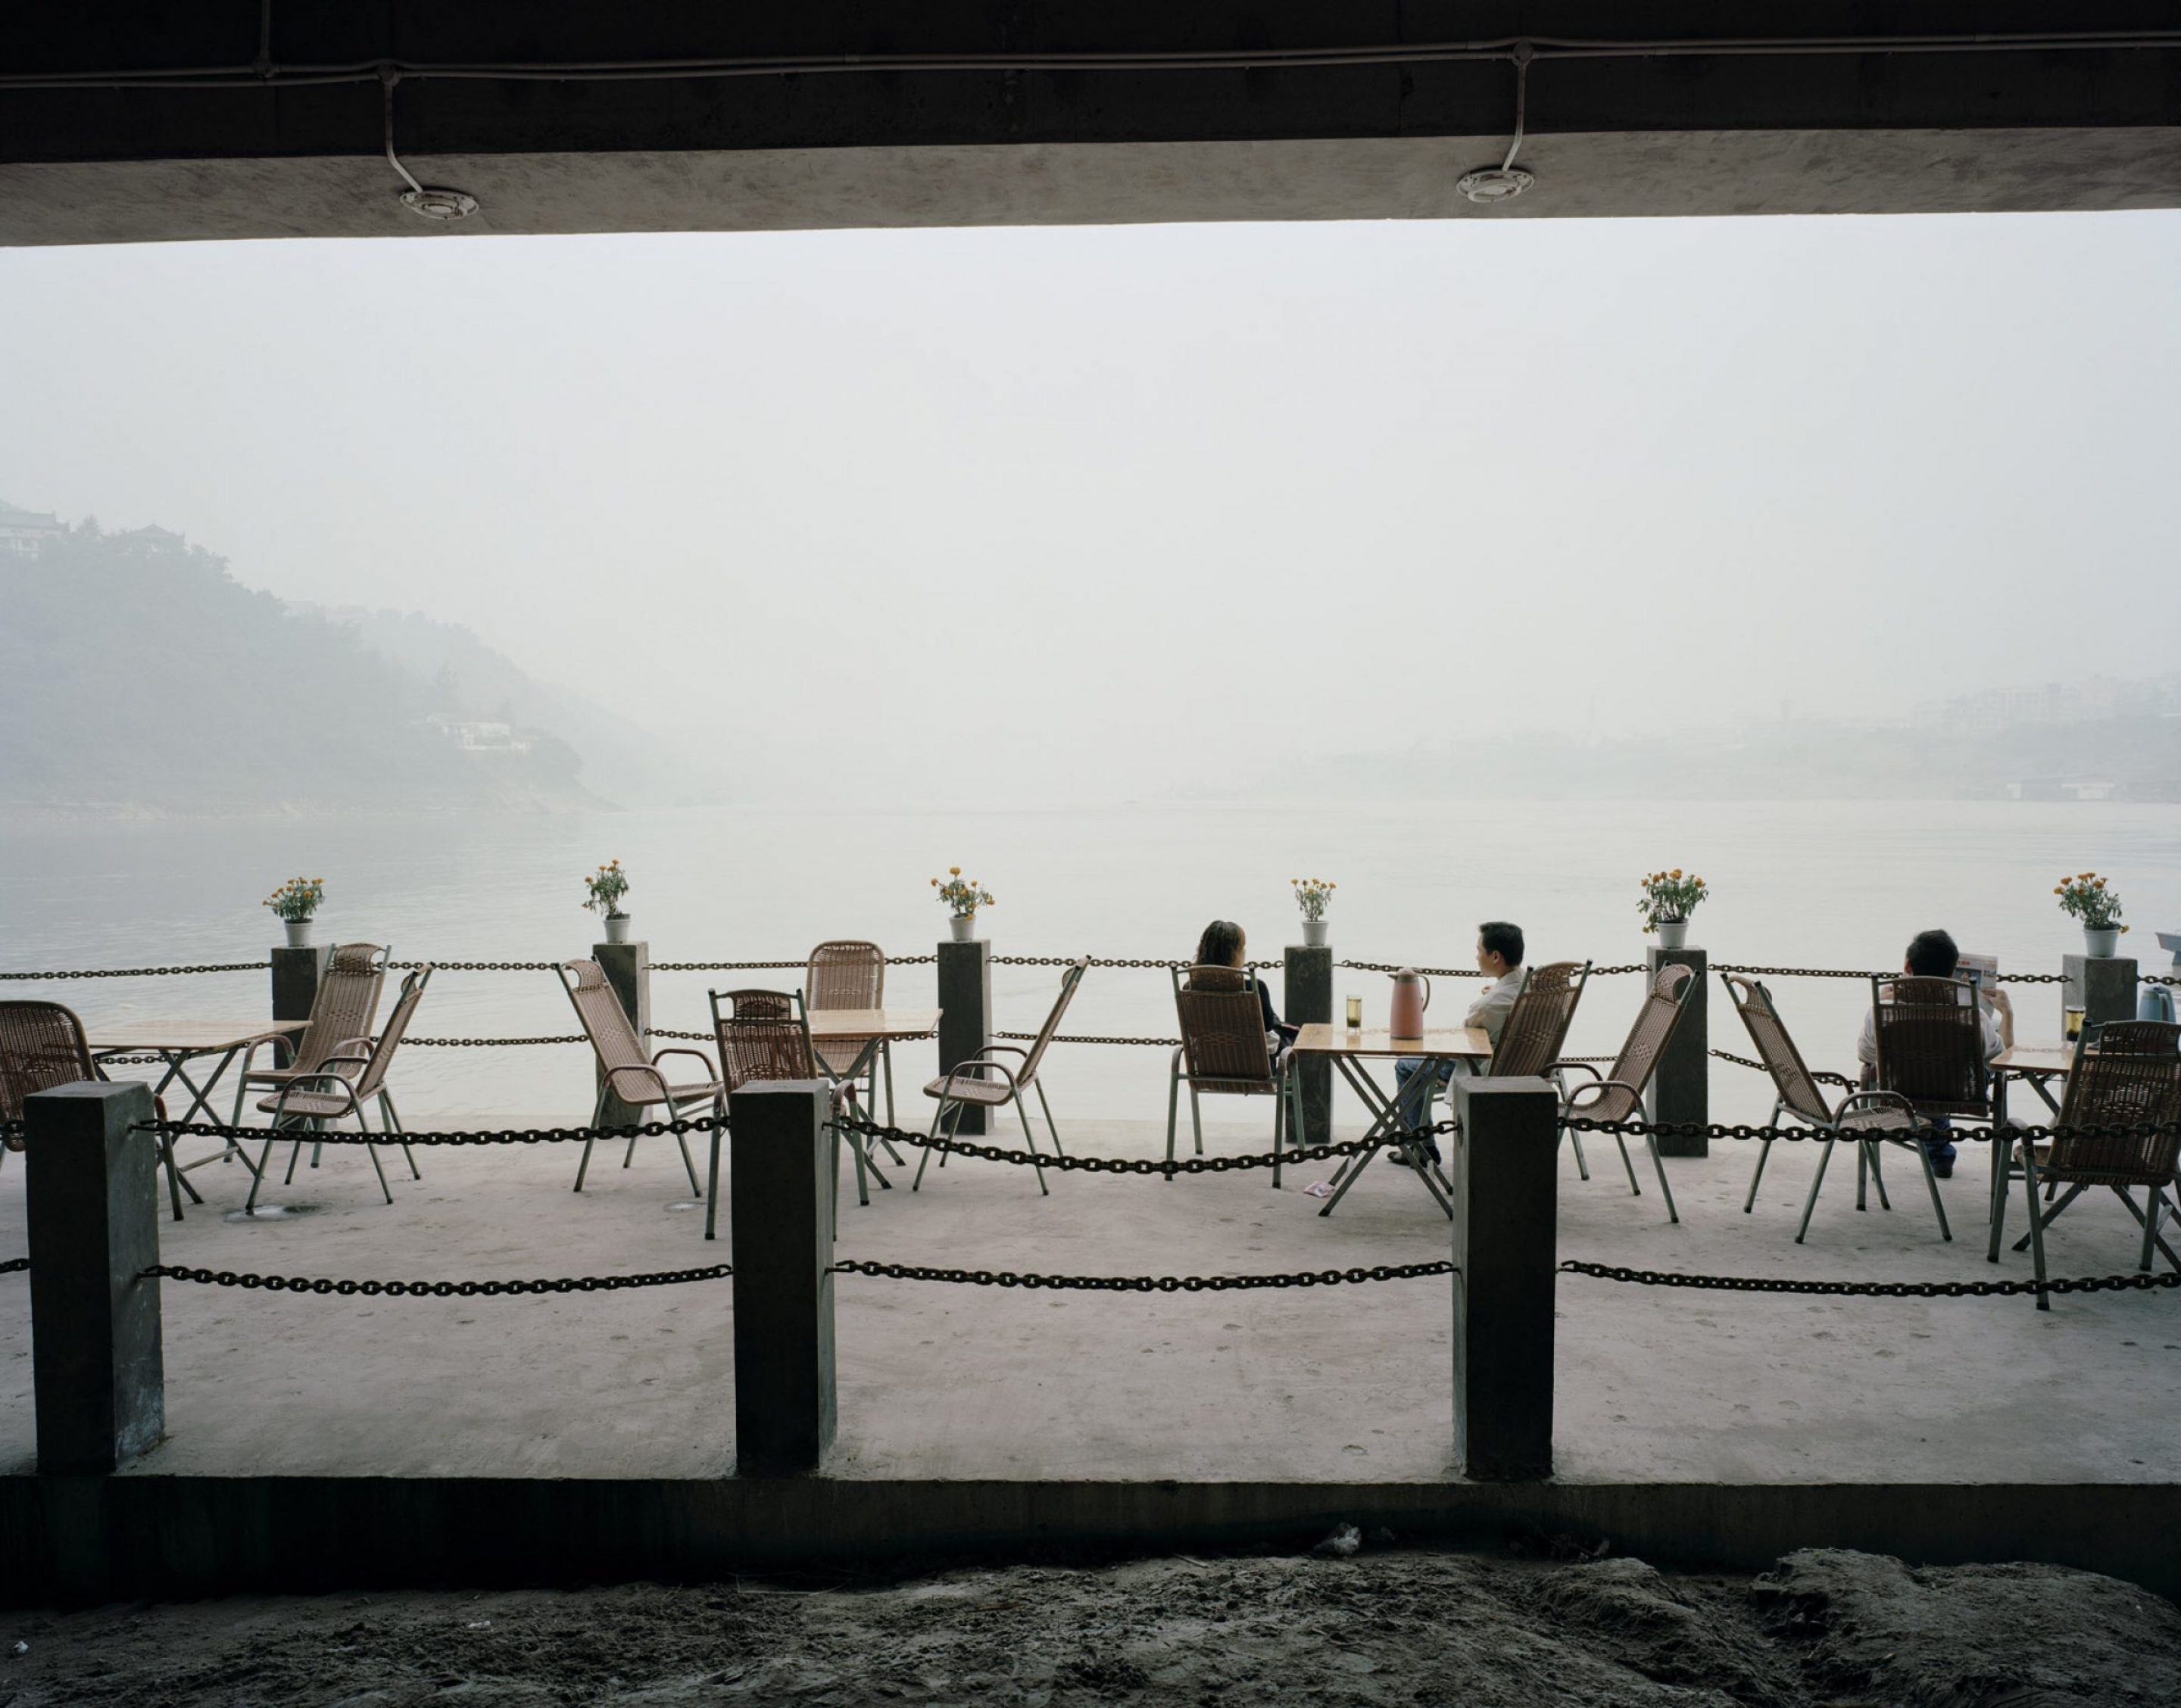 IGNANT-Photography-Nadav-Kander-Yangtze-The-Long-River-014